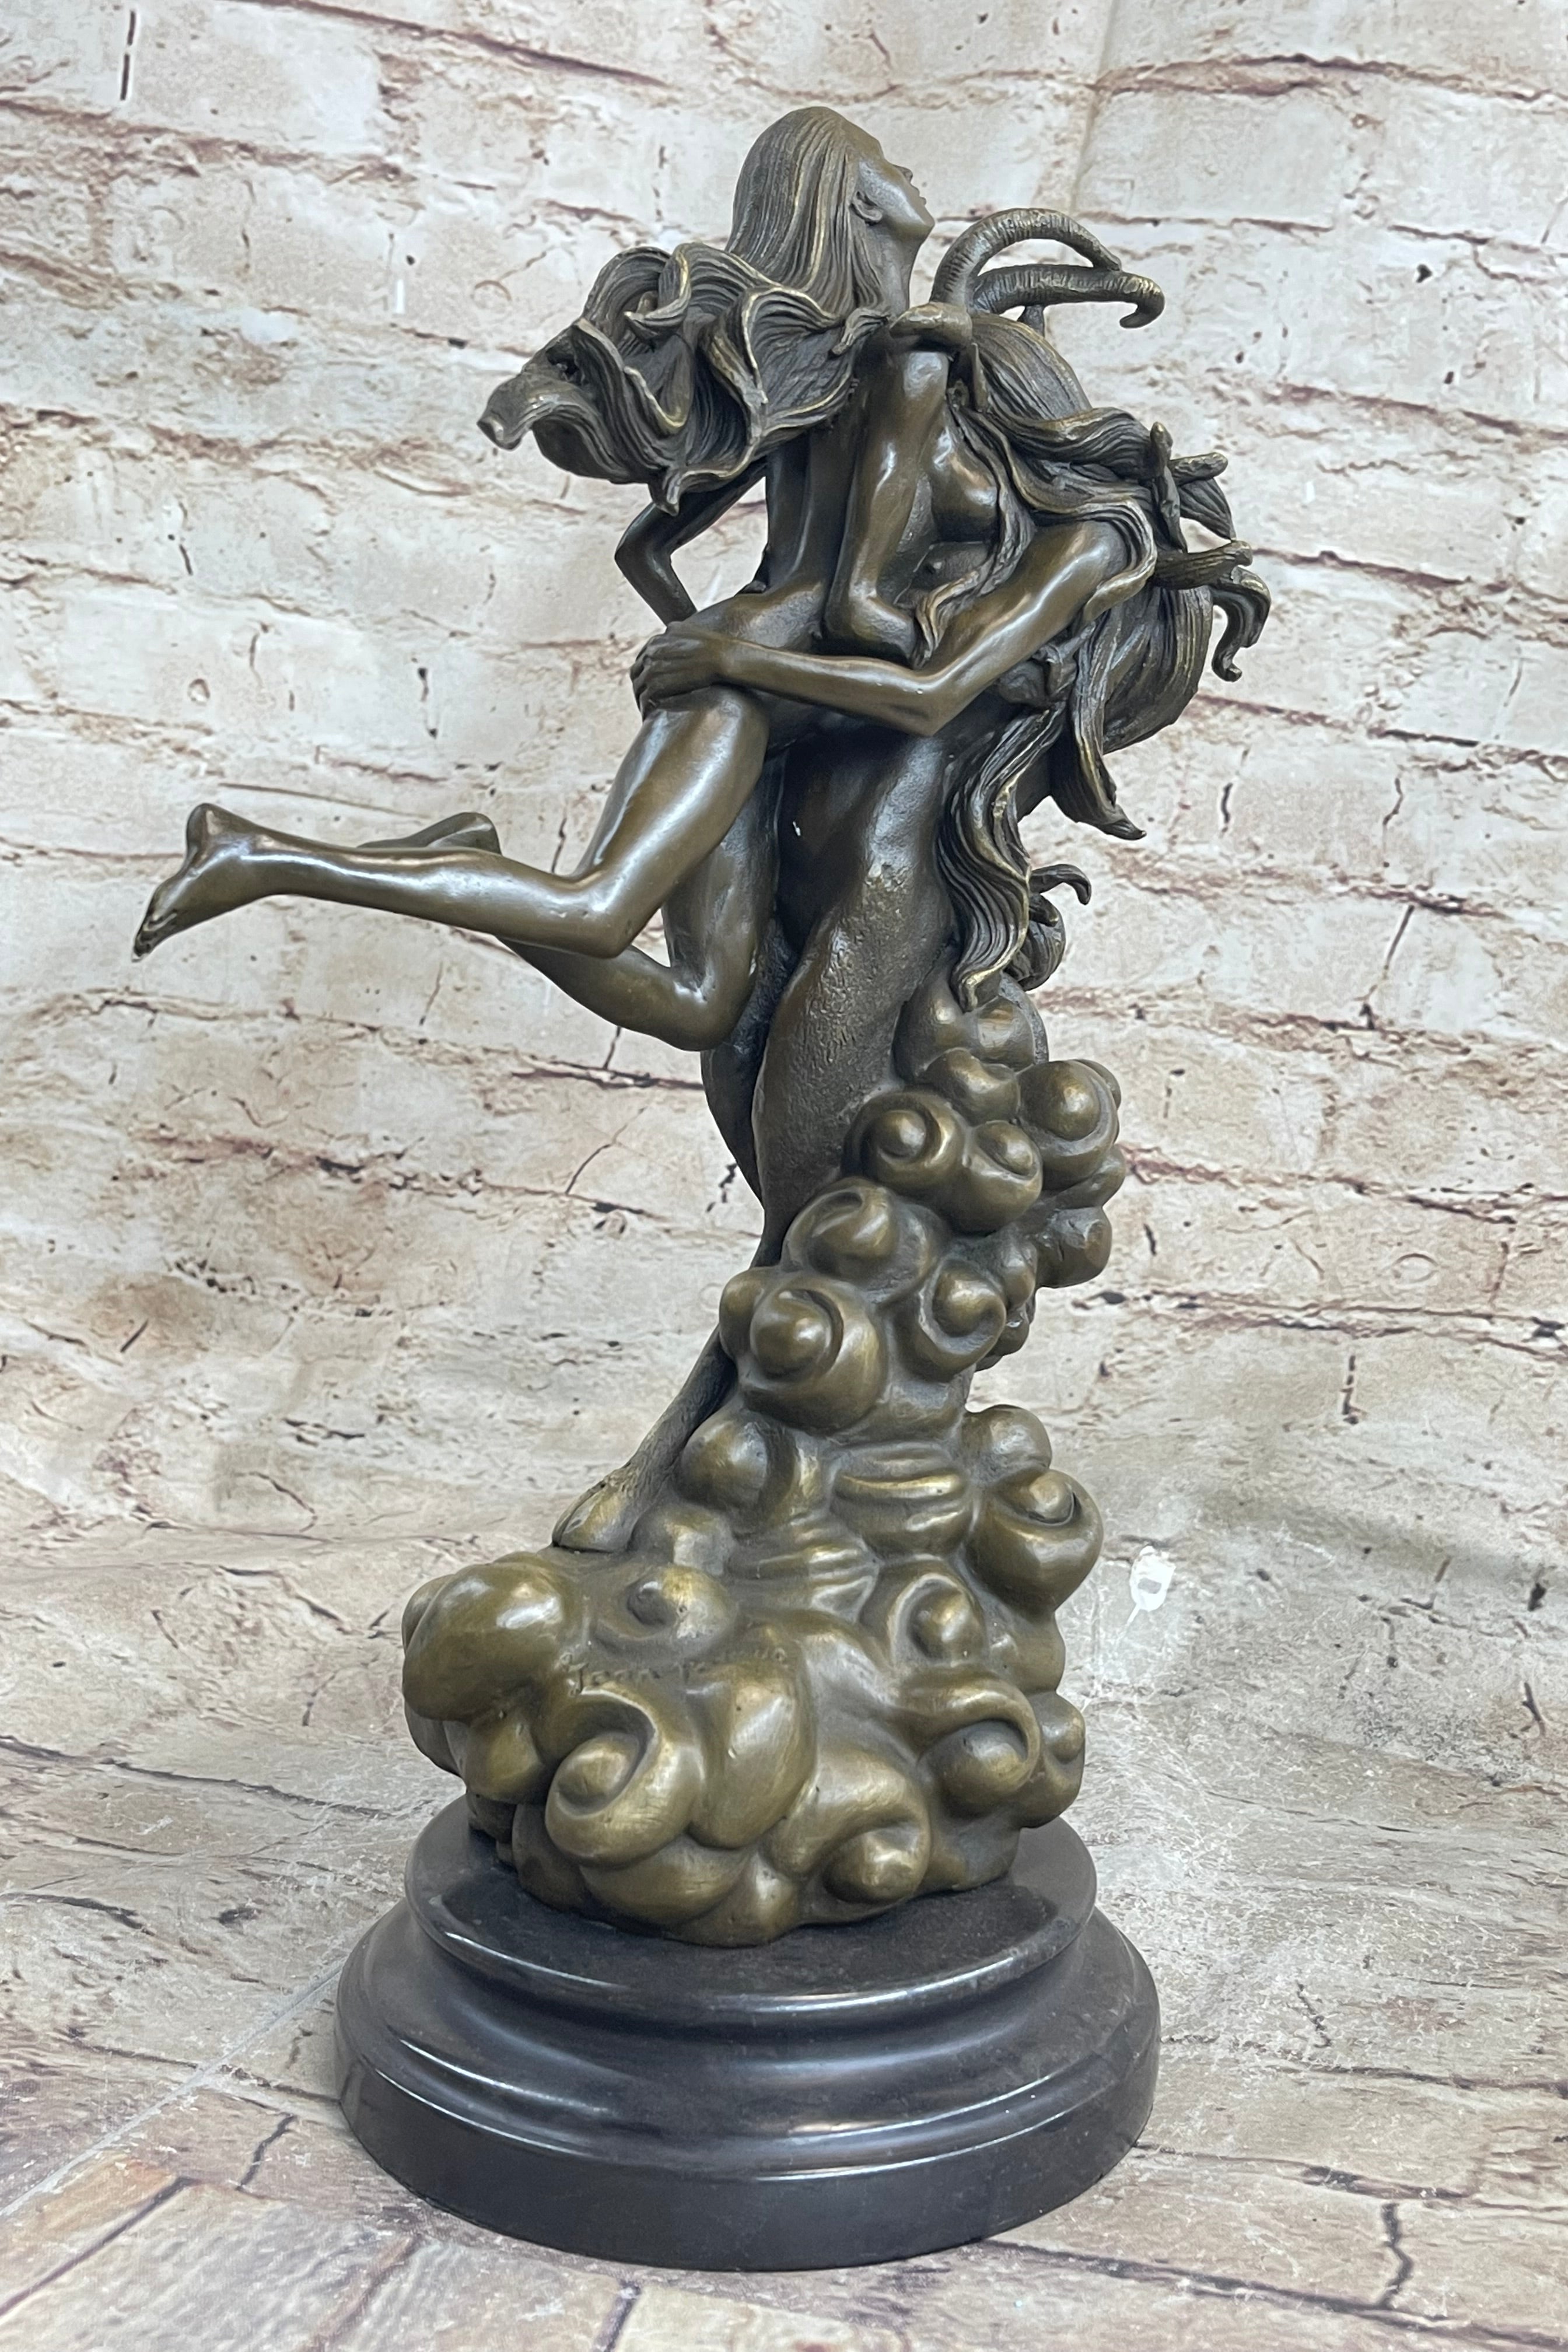 Devil and Nude Female Classic Bronze Sculpture Marble Base Figurine Decoration